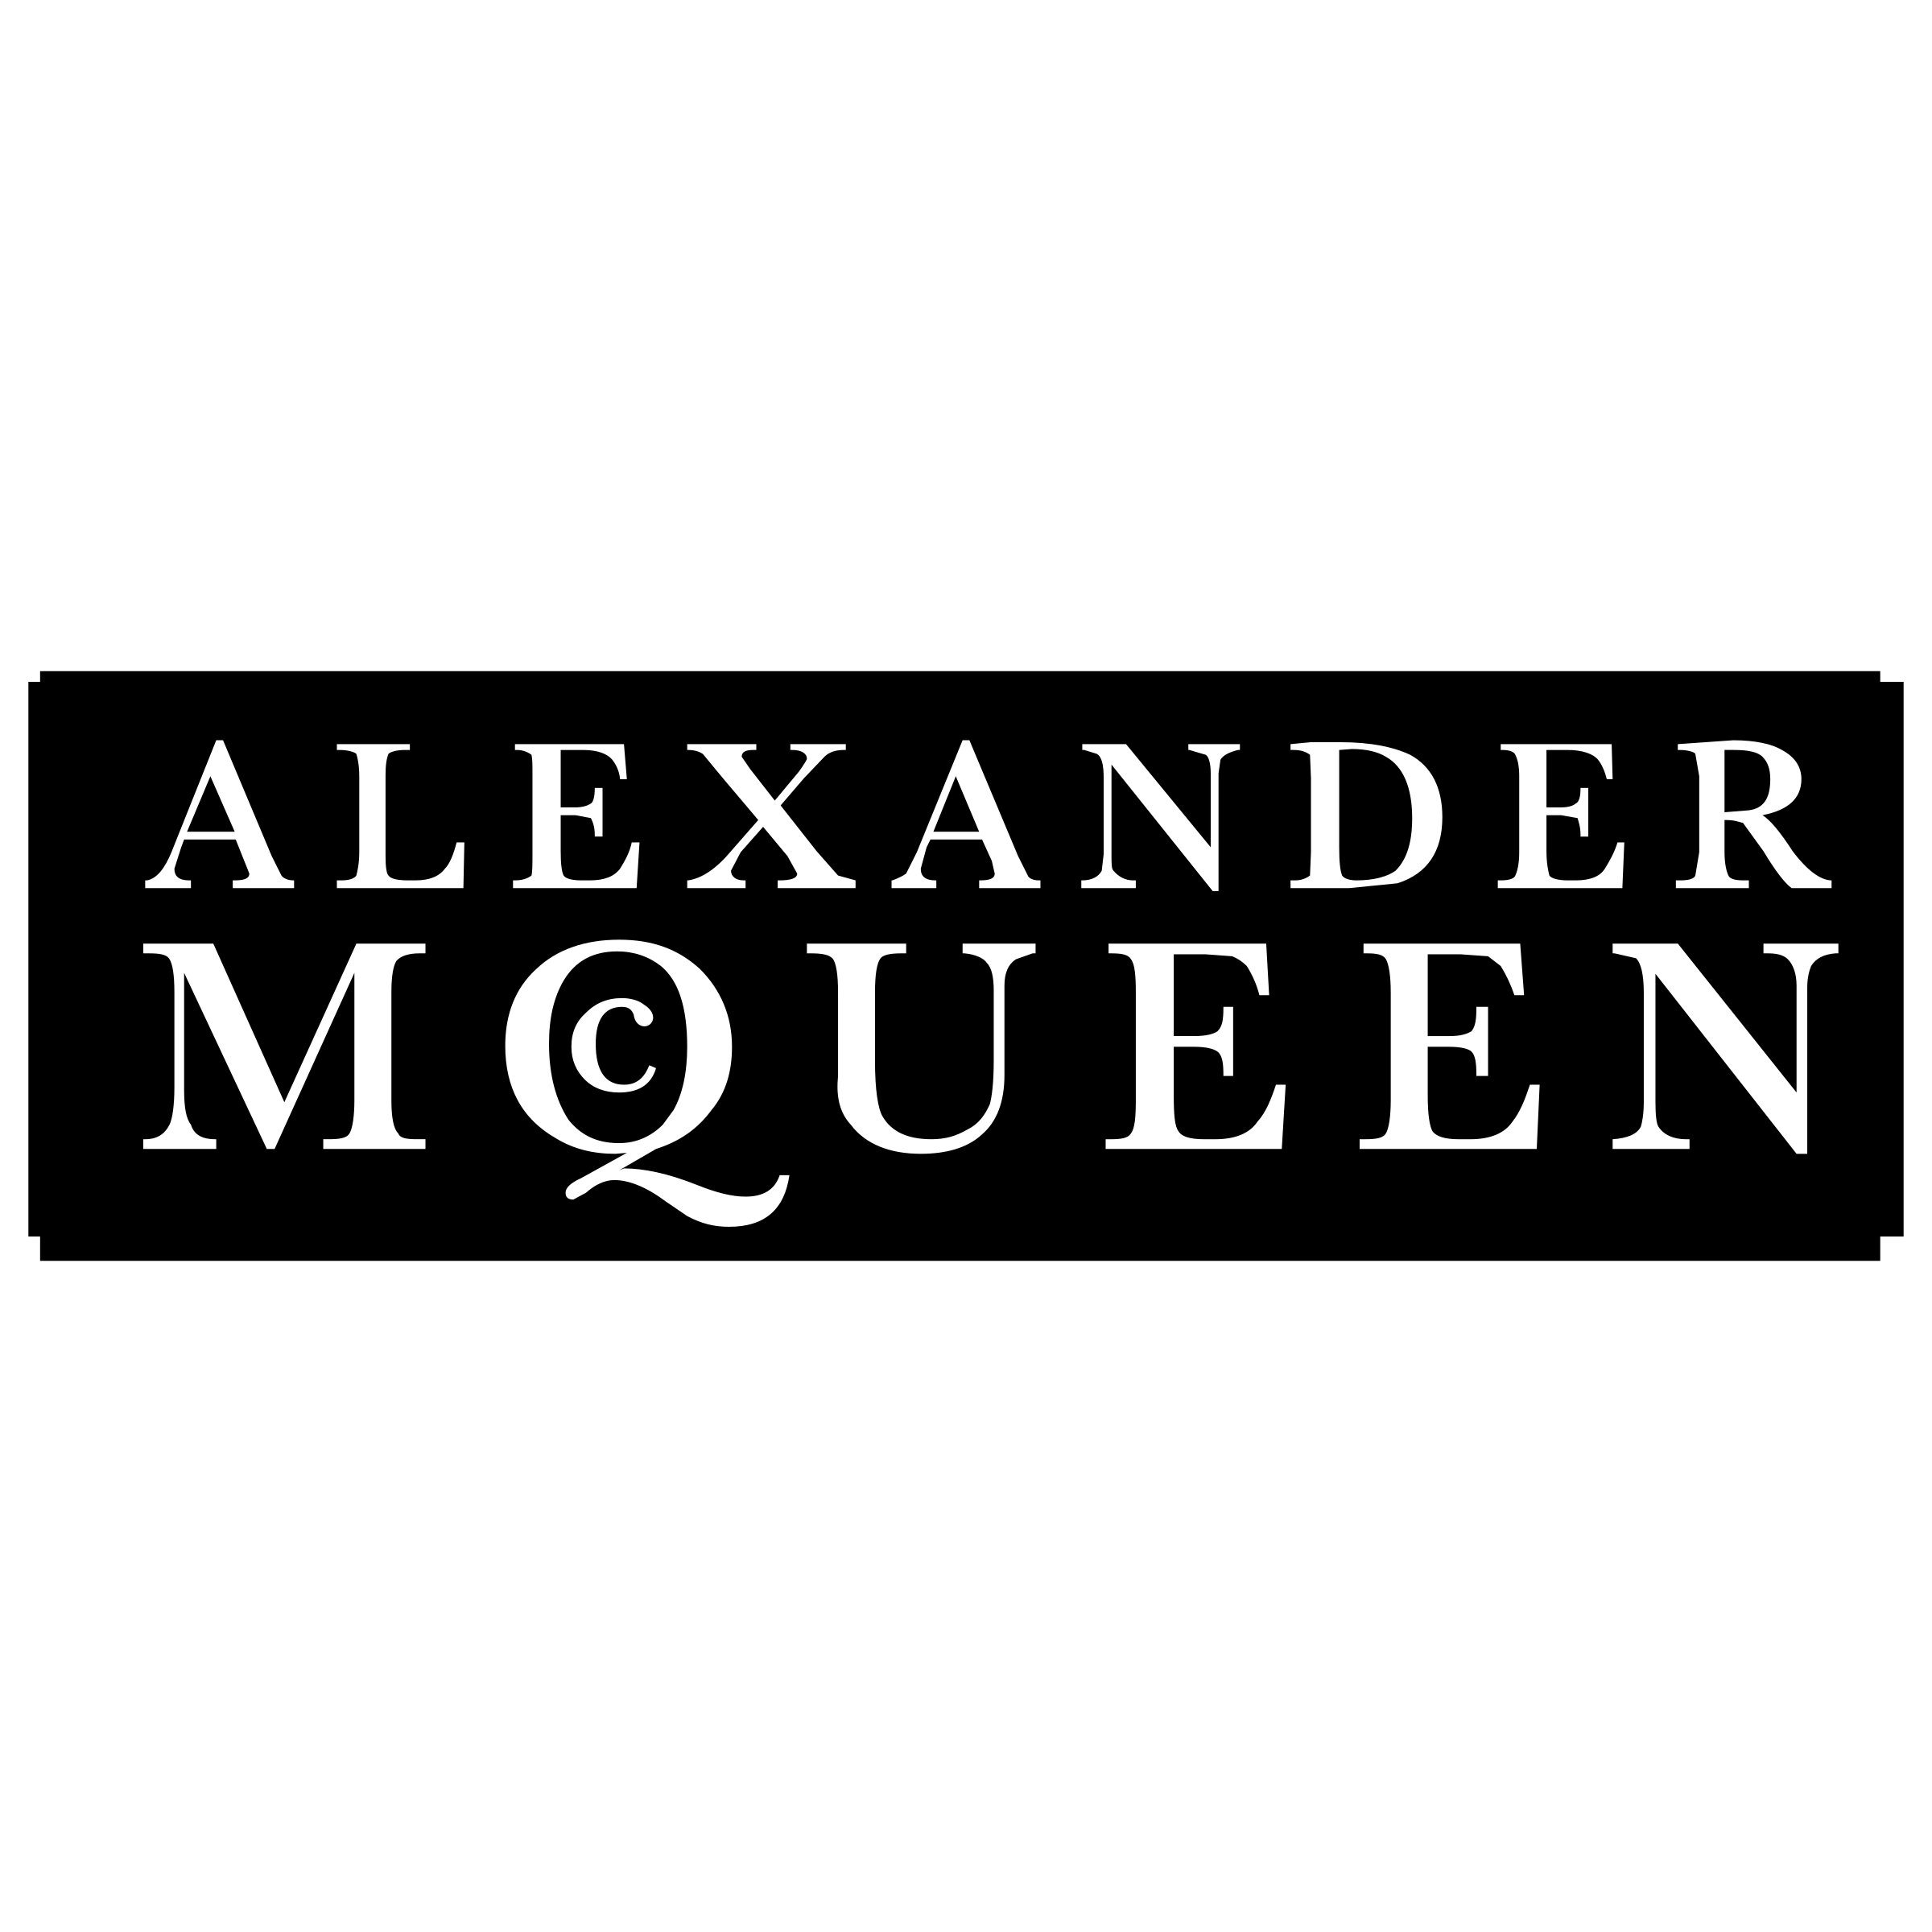 Alexander McQueen Logo - Alexander McQueen Logo PNG Transparent & SVG Vector